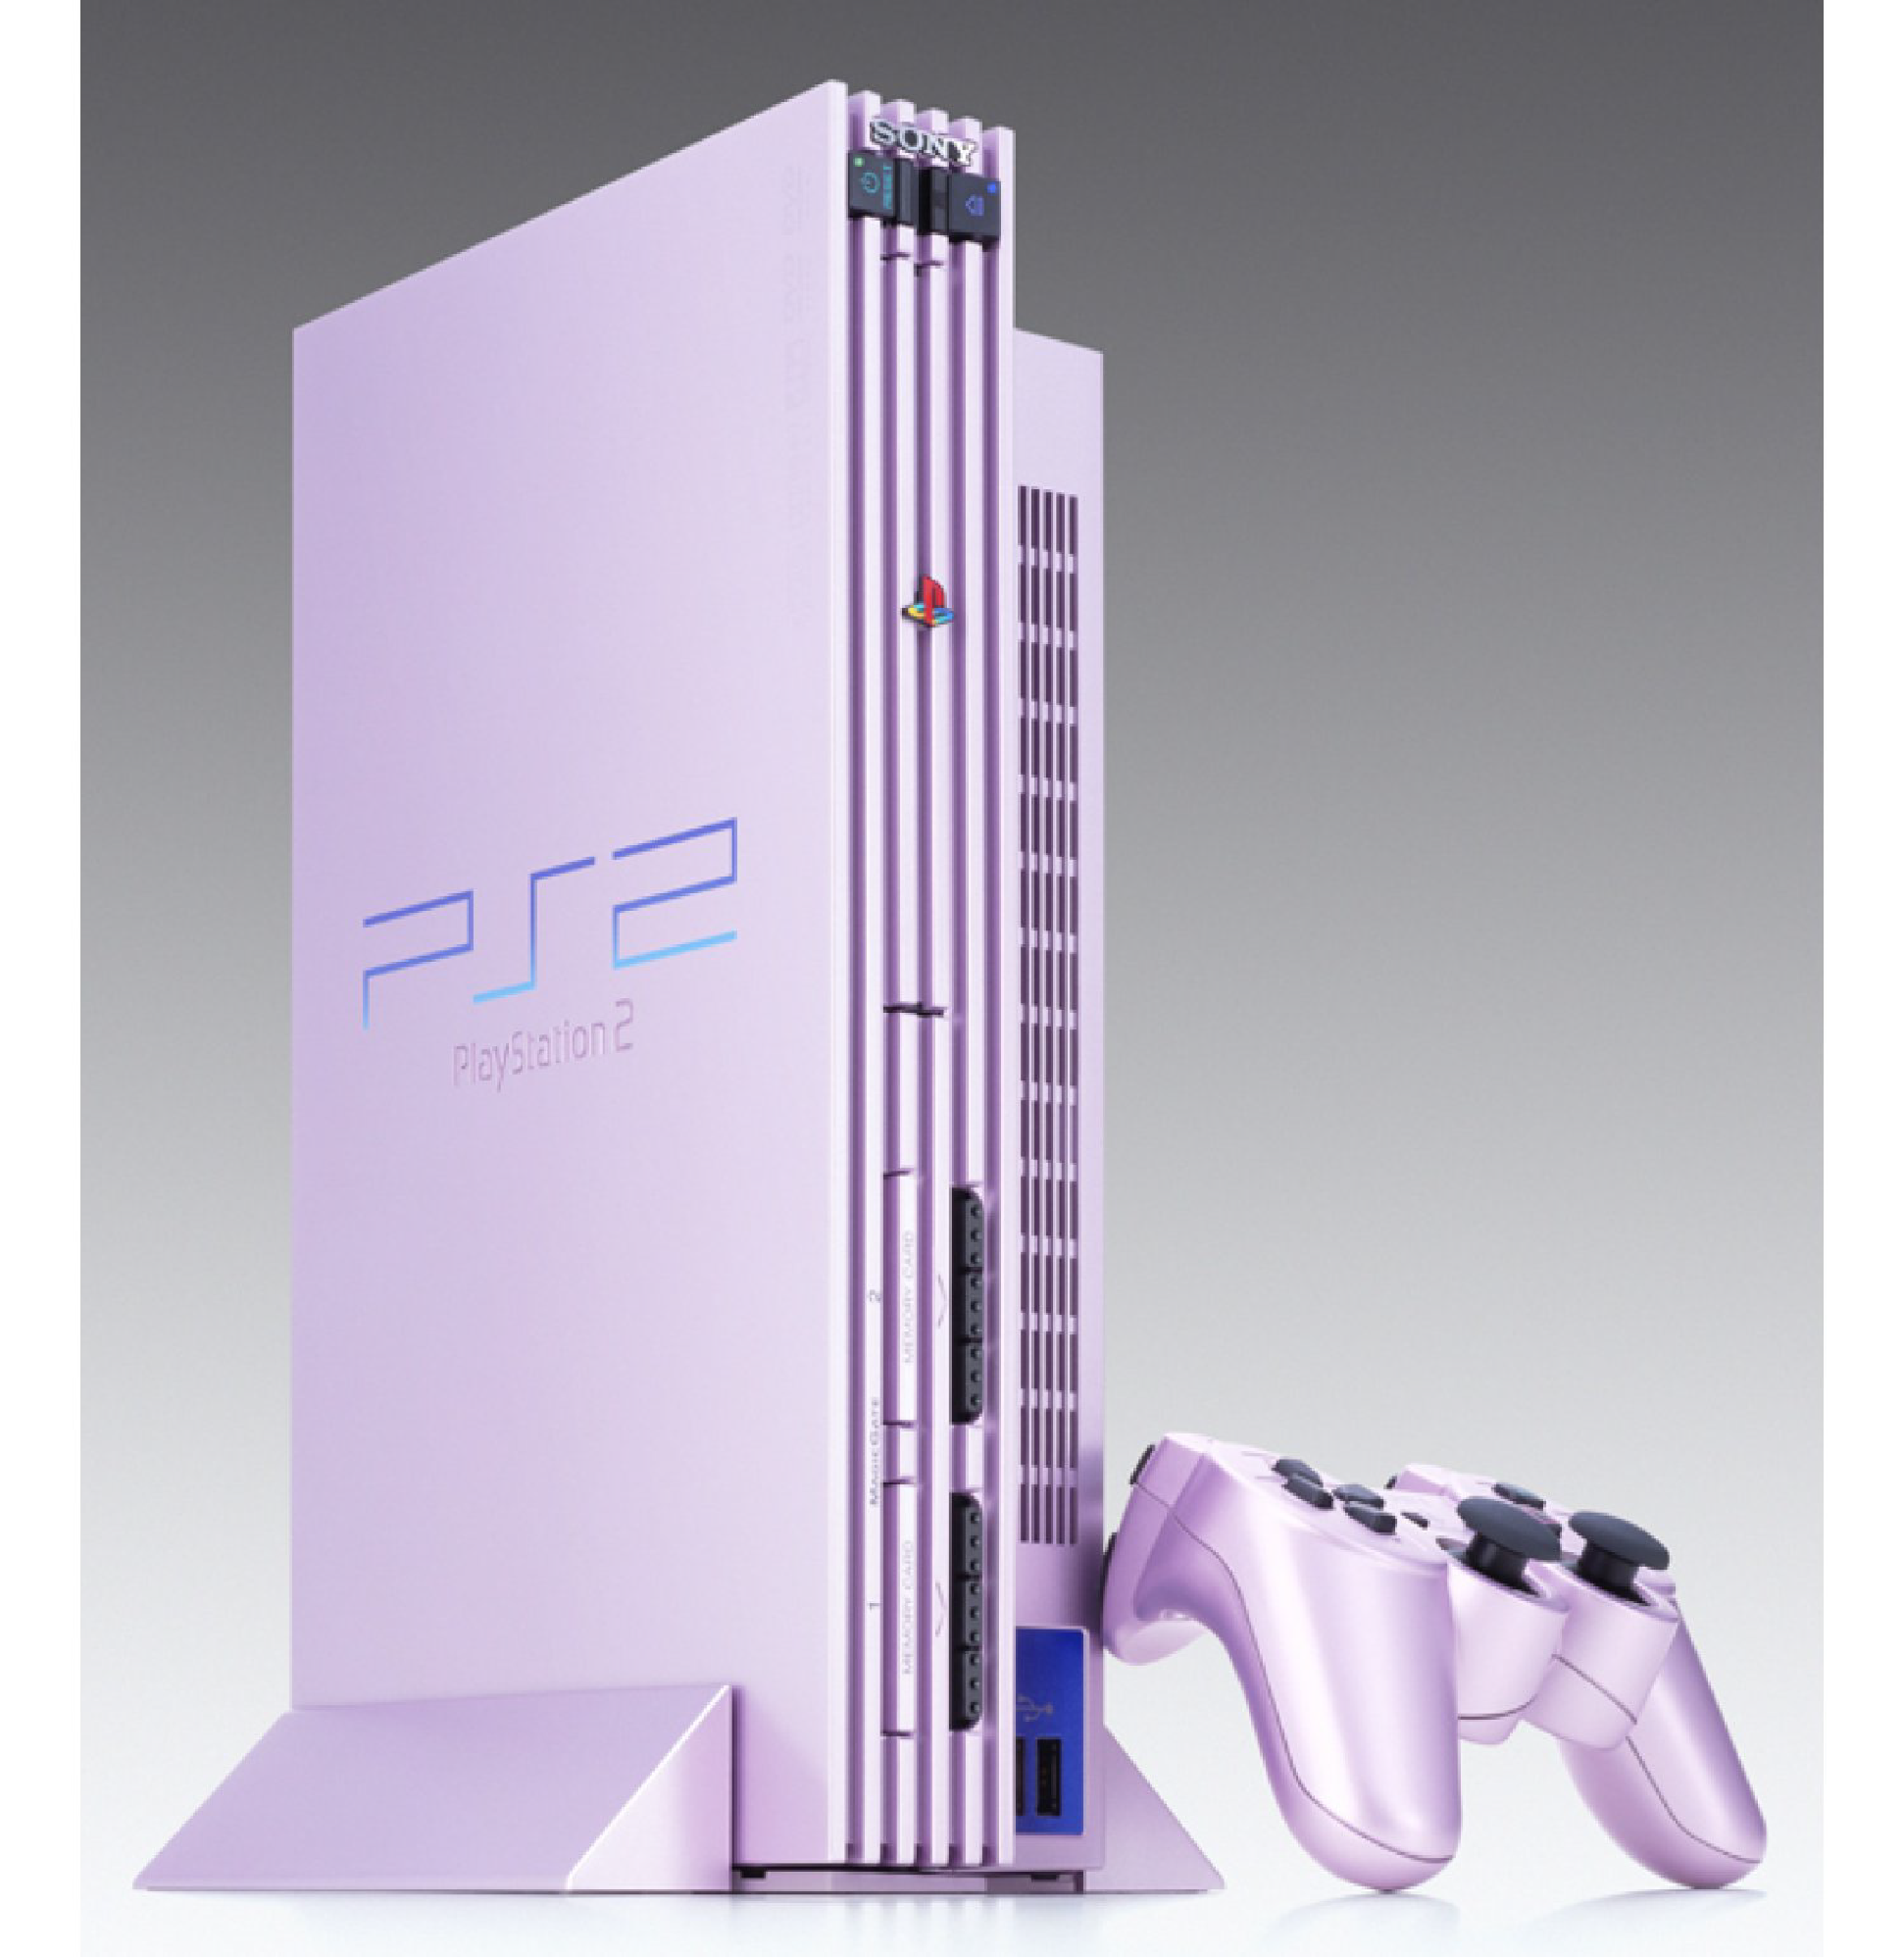 Sony Playstation 2 Sakura Pink Retropixl Retrogaming retro gaming Rare Console Collector Limited Edition Japan Import